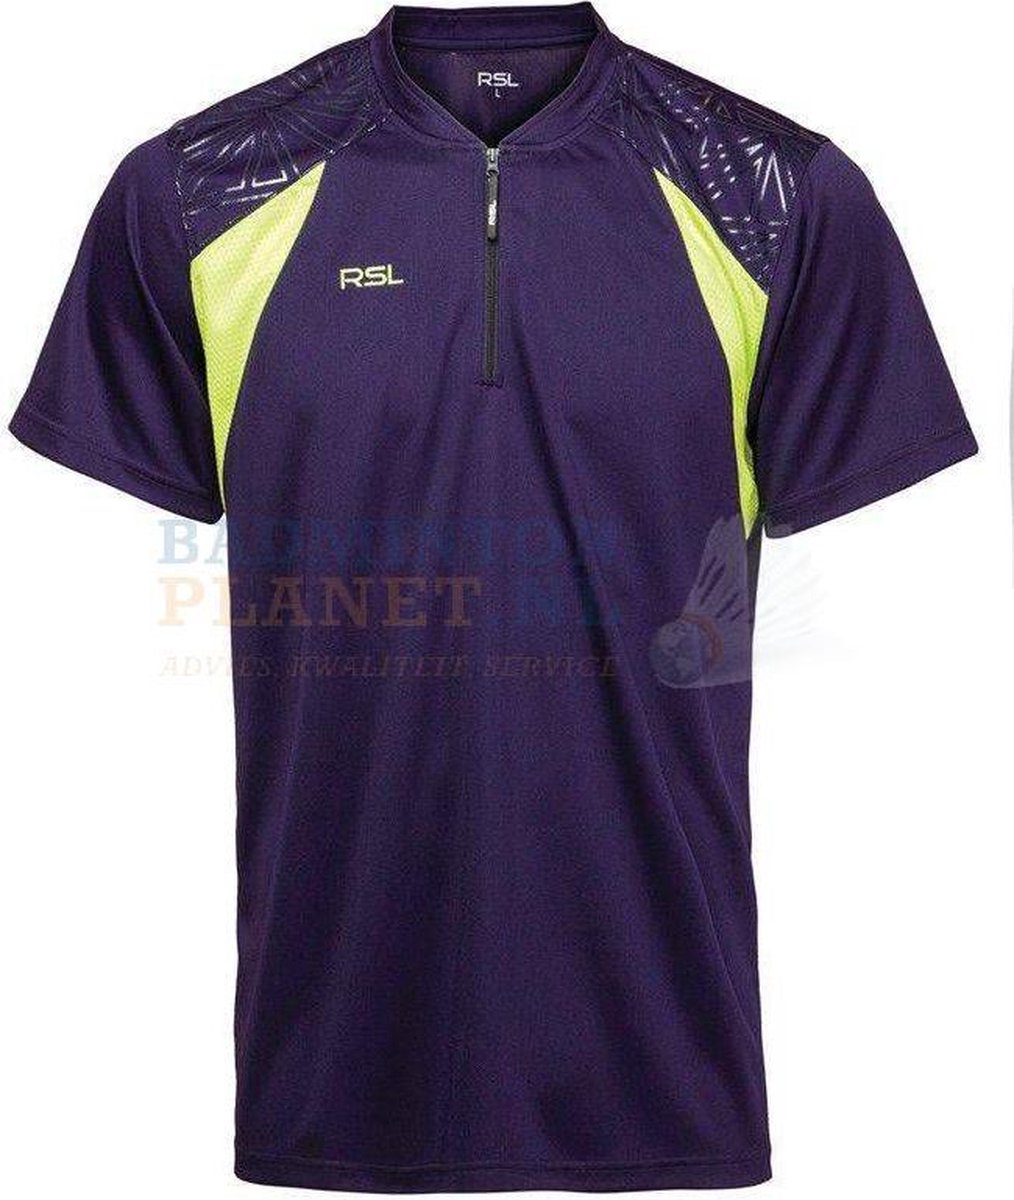 RSL T-shirt Badminton Tennis Paars/Geel maat XS